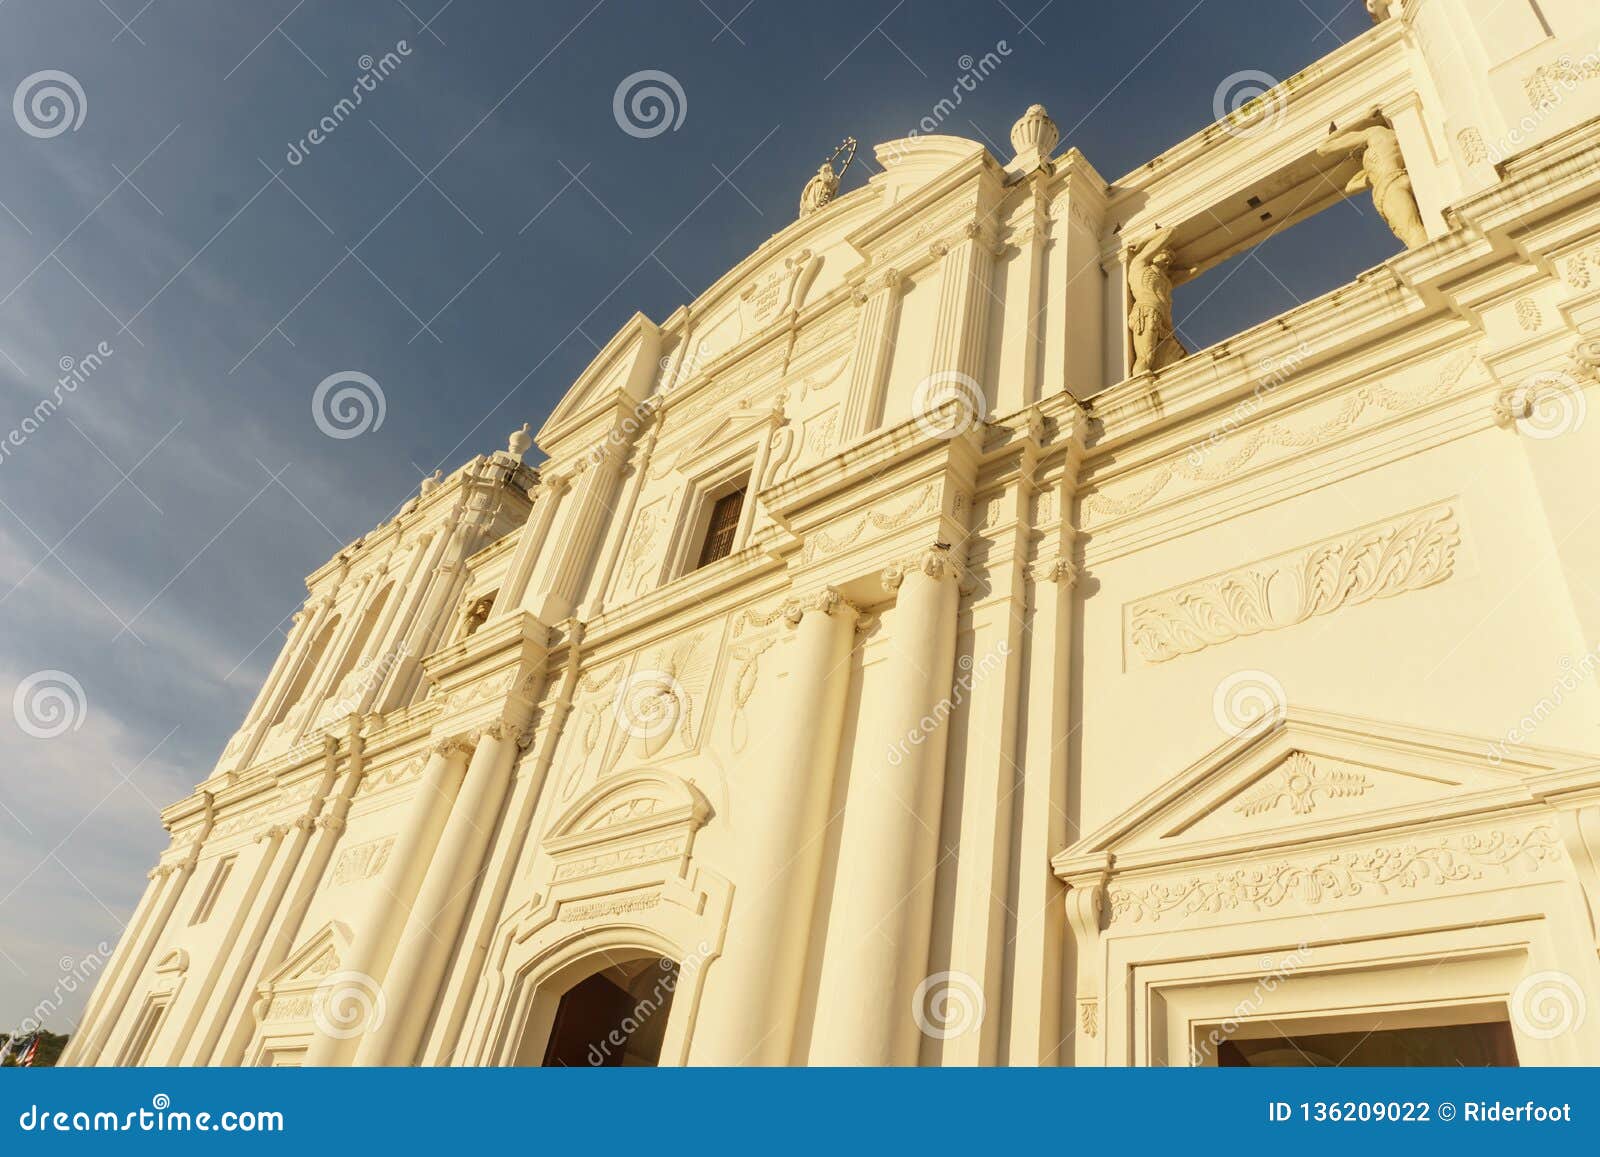 Antigua Guatemala vs León Nicaragua Leon-nicaragua-catedral-tur%C3%ADstica-im%C3%A1genes-del-viaje-136209022